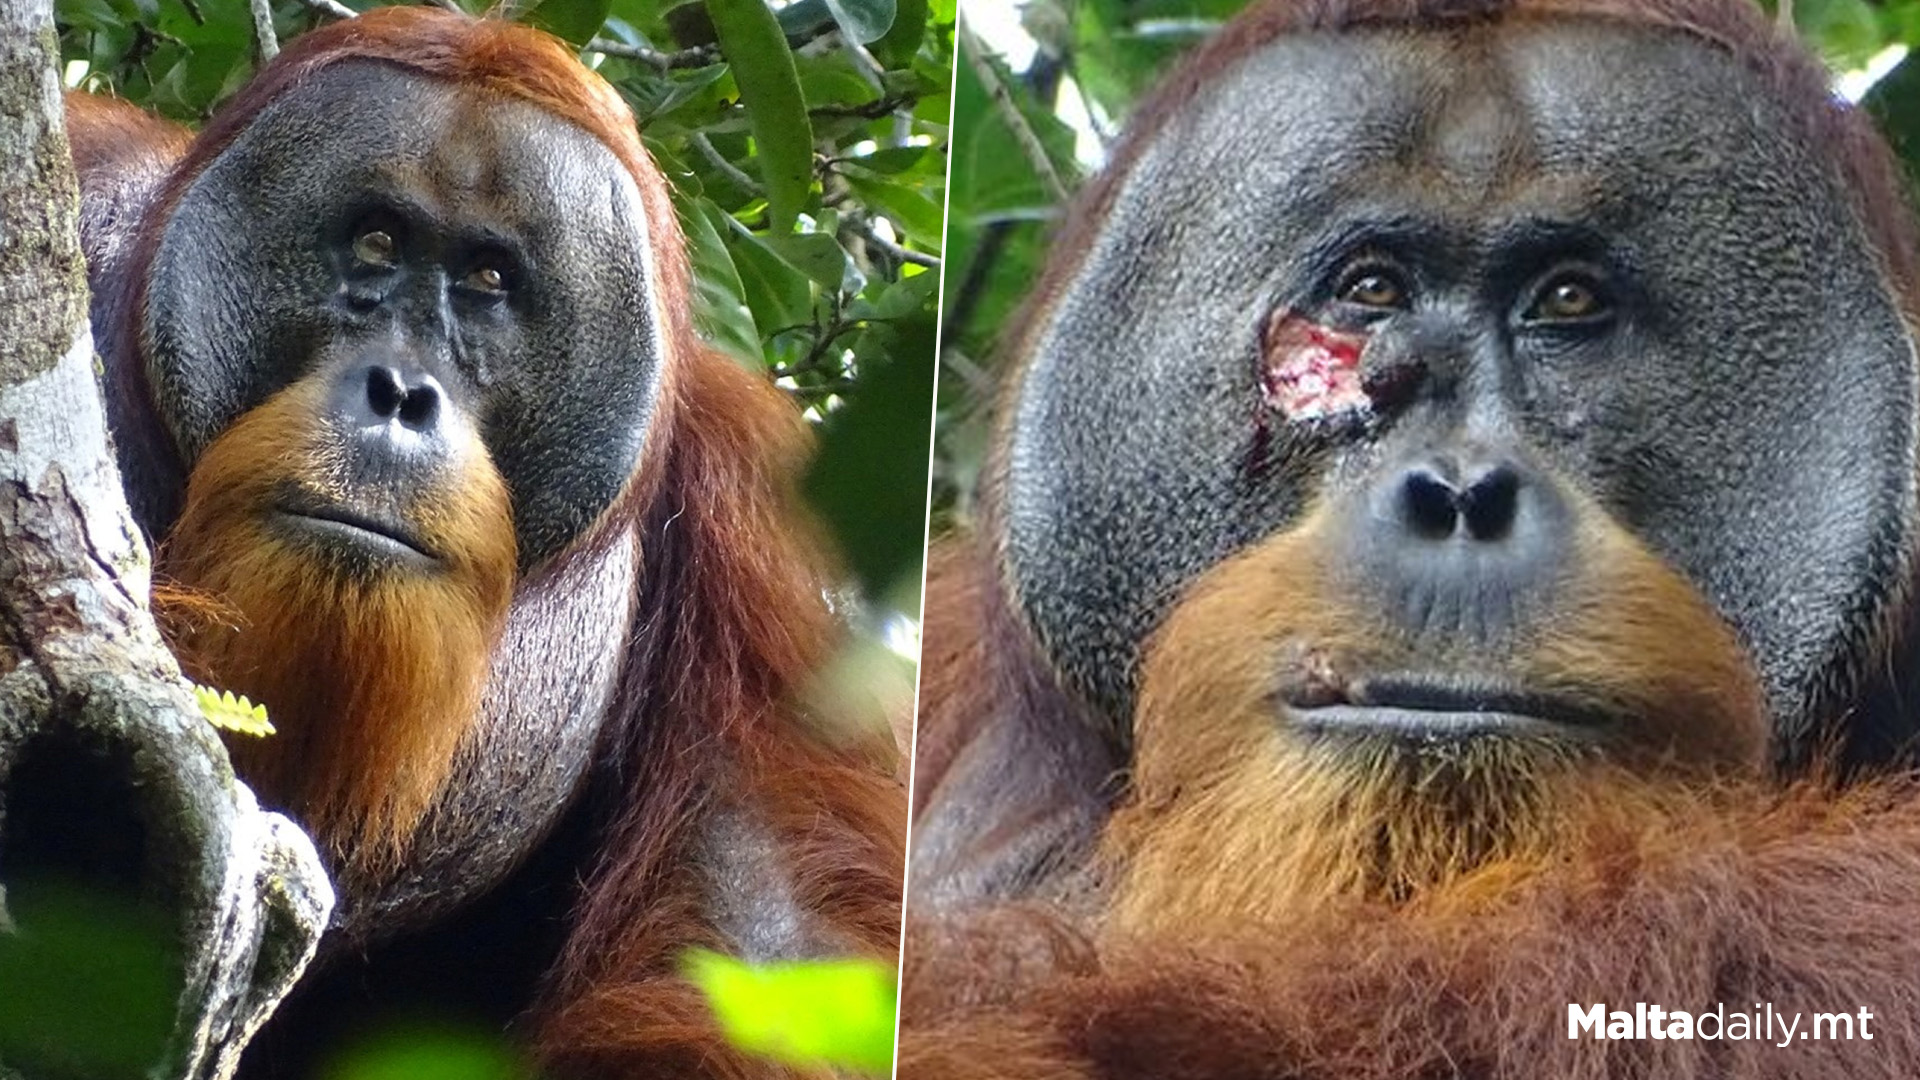 Orangutan Seen Applying Plant To Heal Face Wound